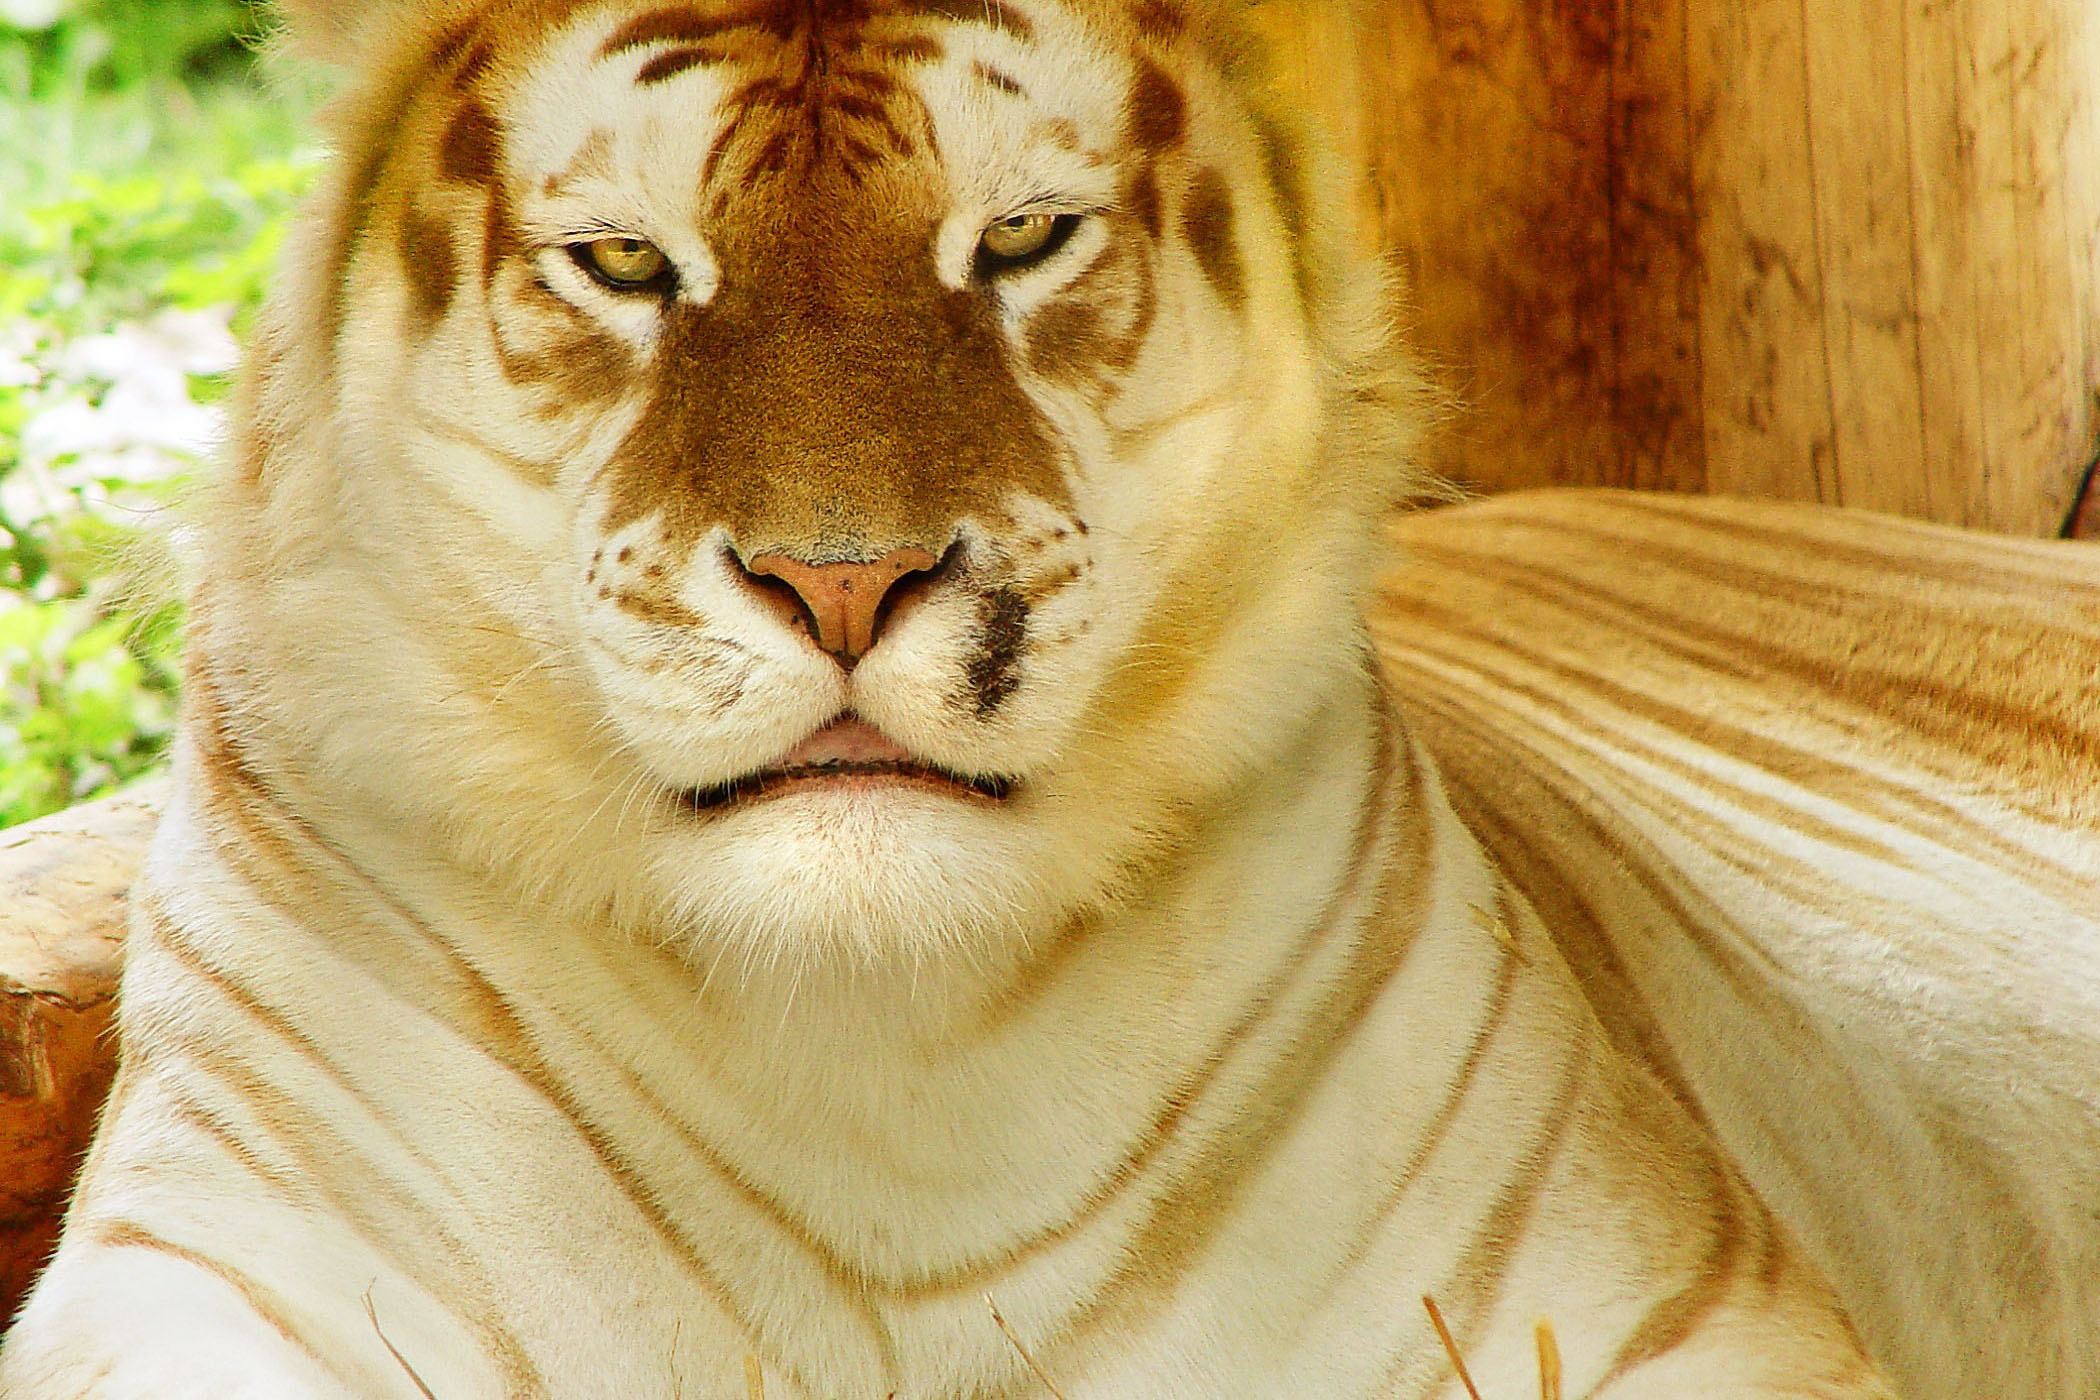 The Alpha Tiger iPhone Wallpaper  Tiger images, Tiger wallpaper, Wild  animal wallpaper